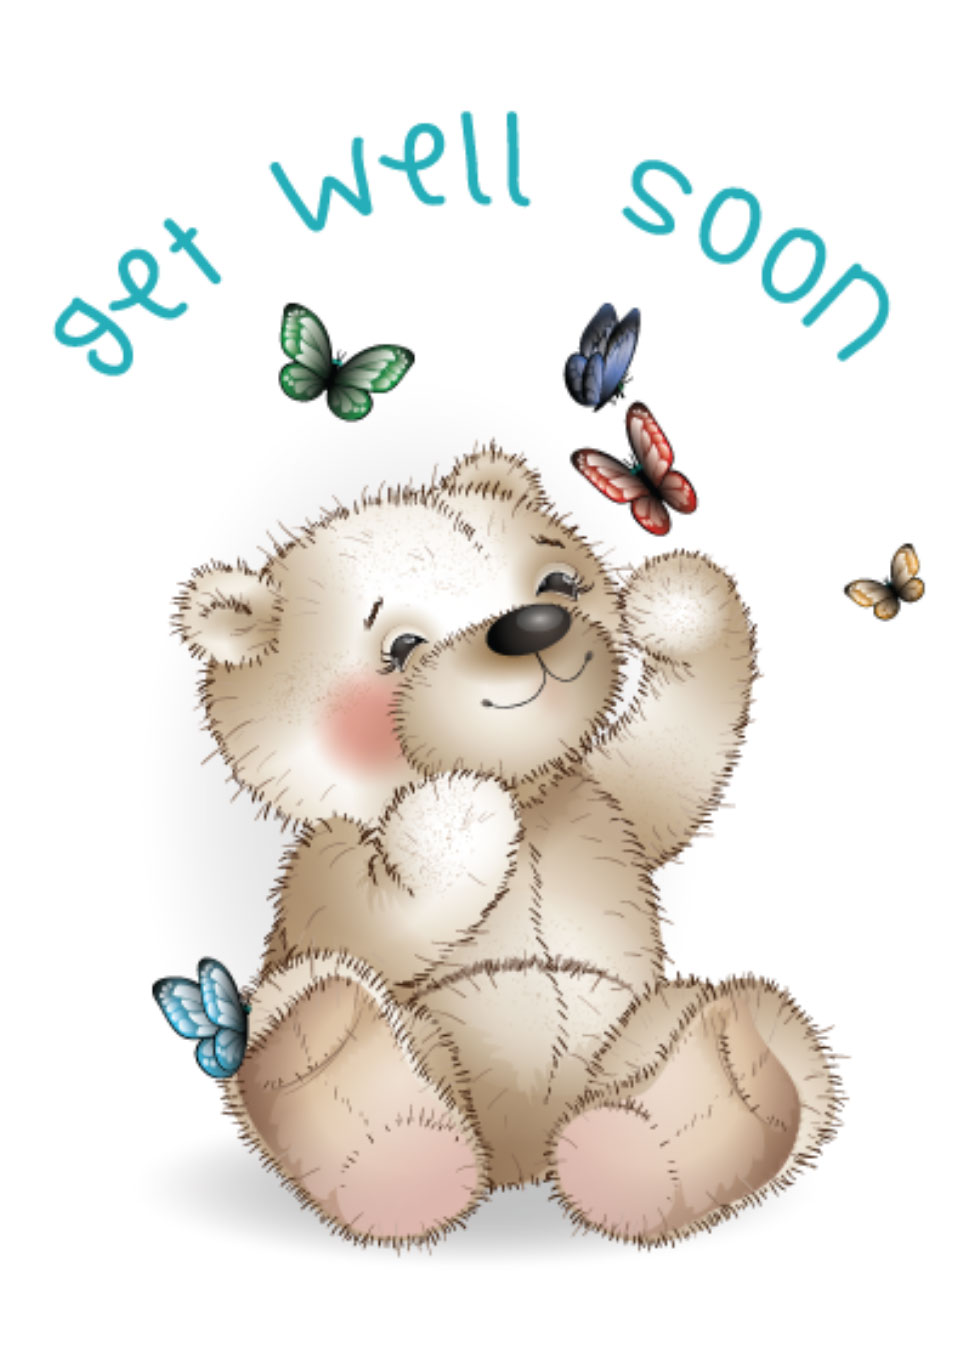 Get Well Soon Cute Bear